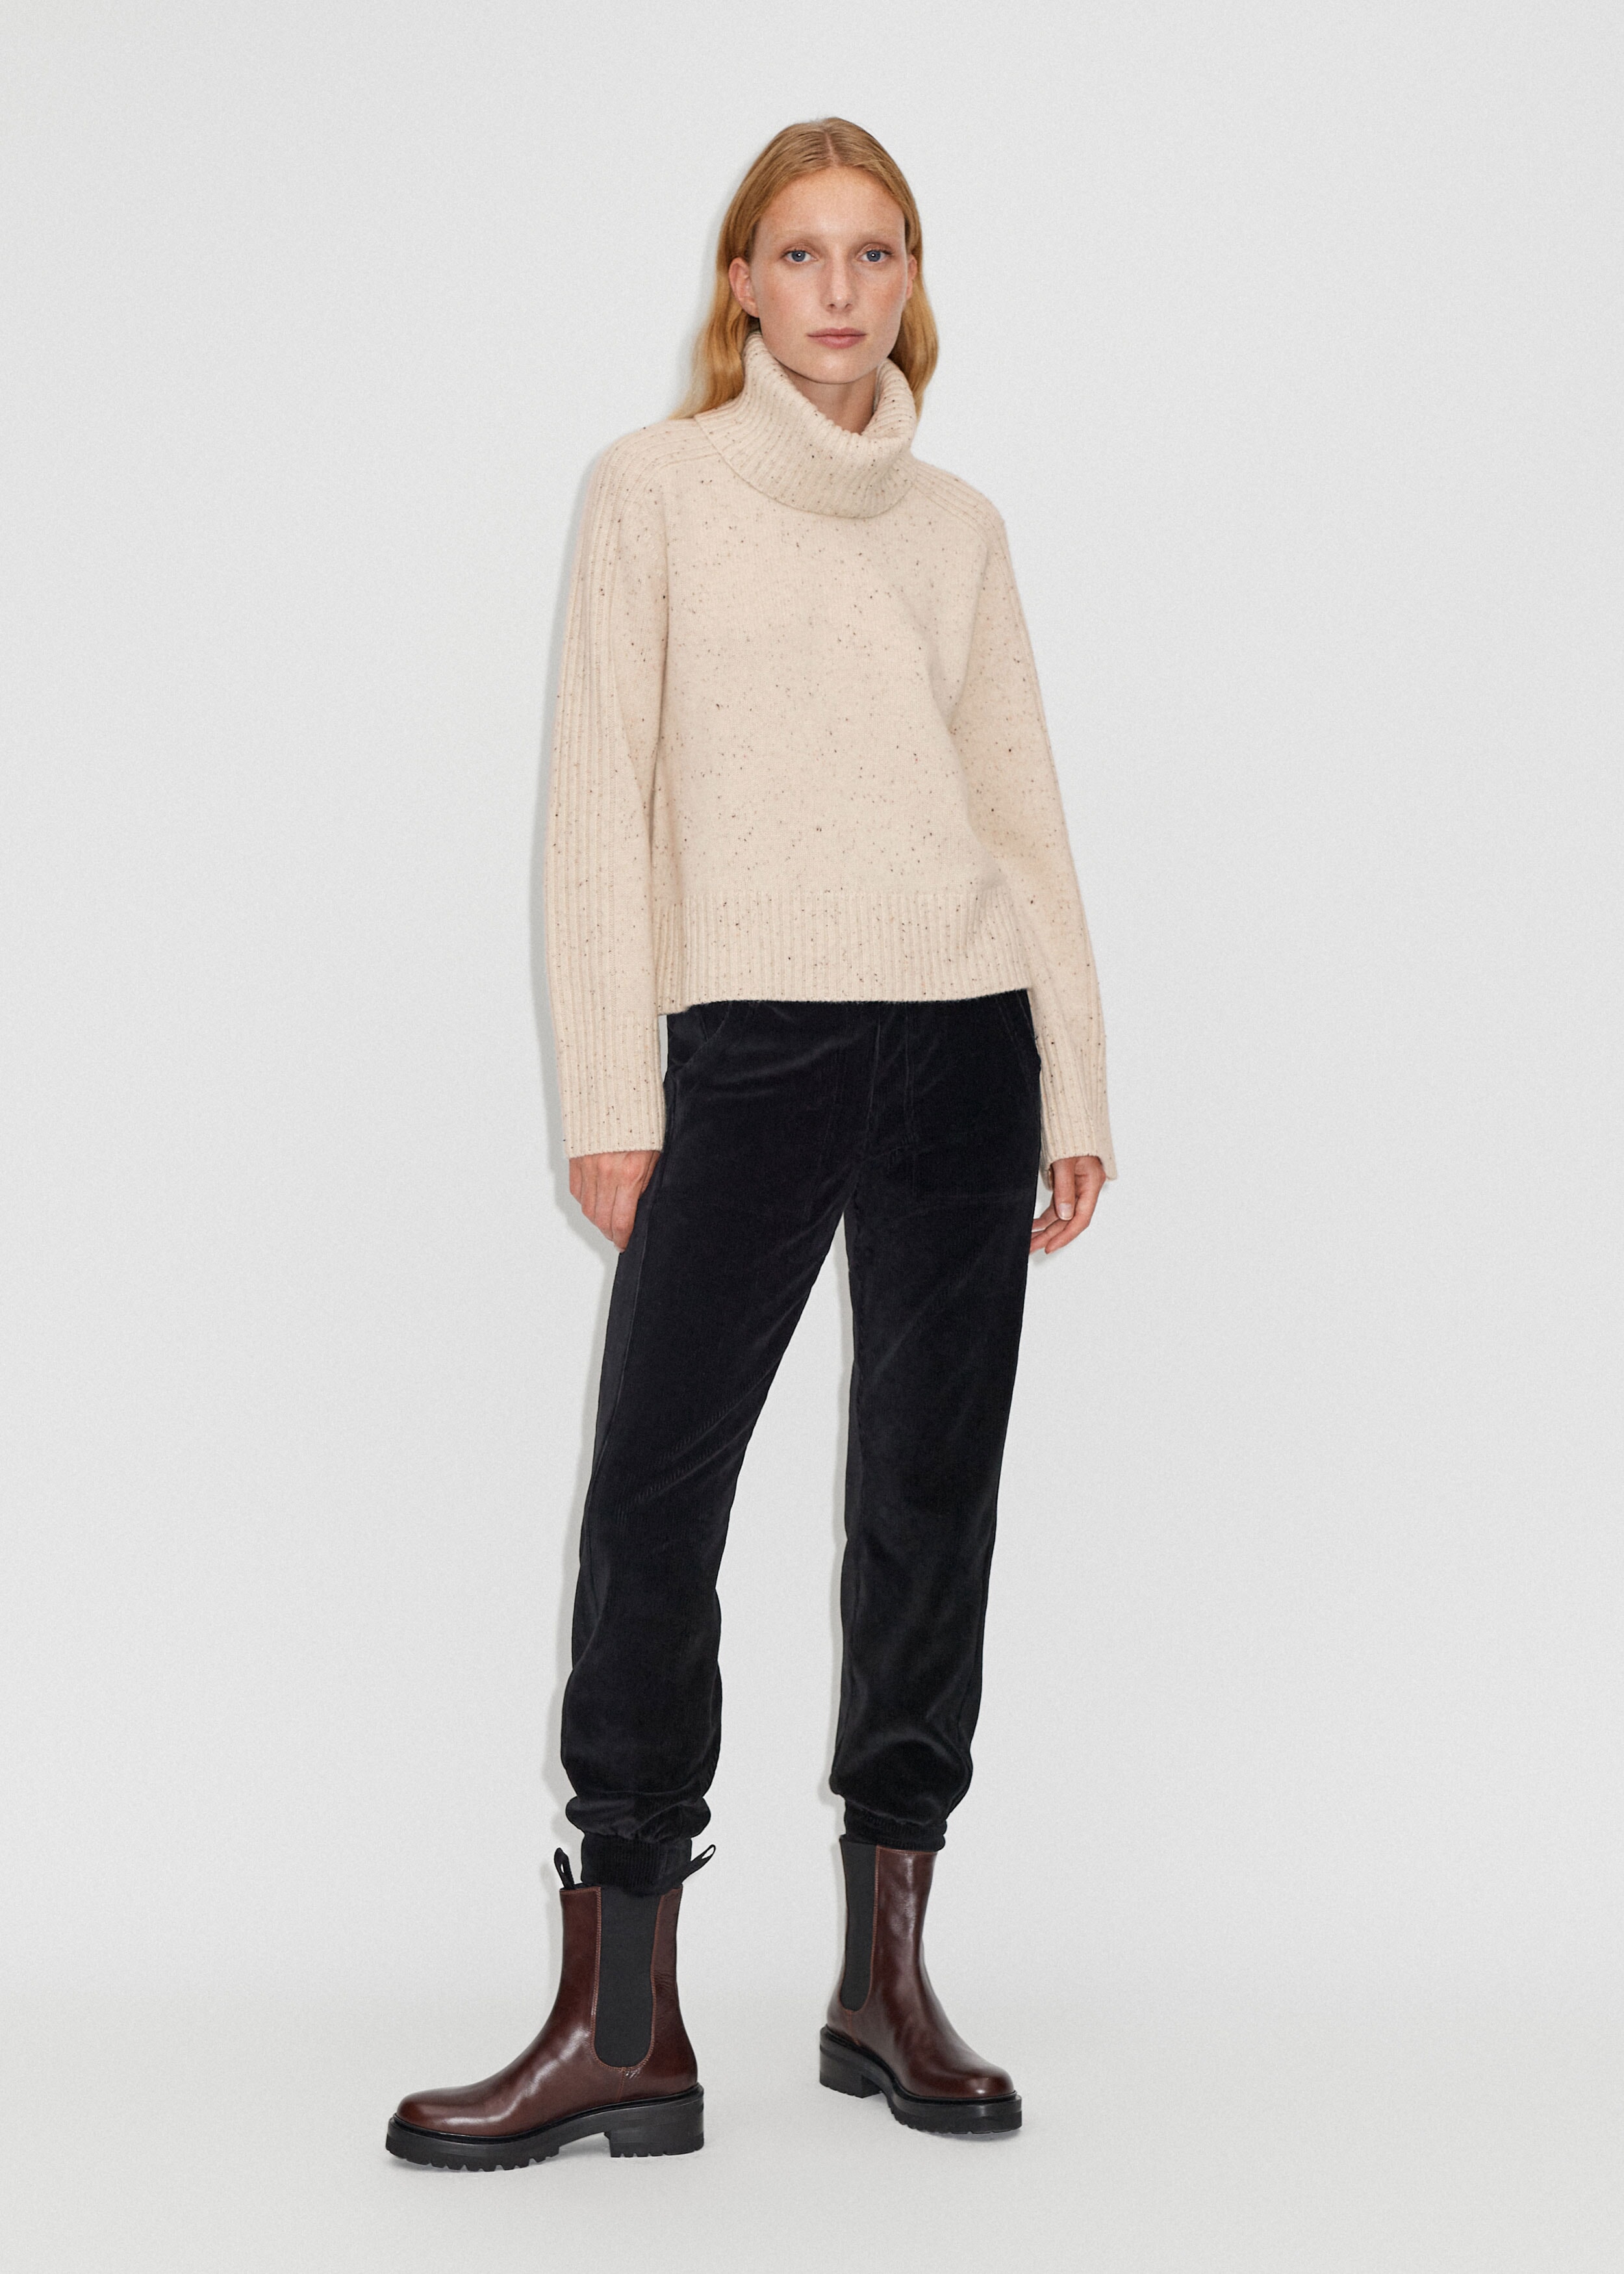 Merino Cashmere Saddle Shoulder Sweater + Snood Oatmeal Speckle